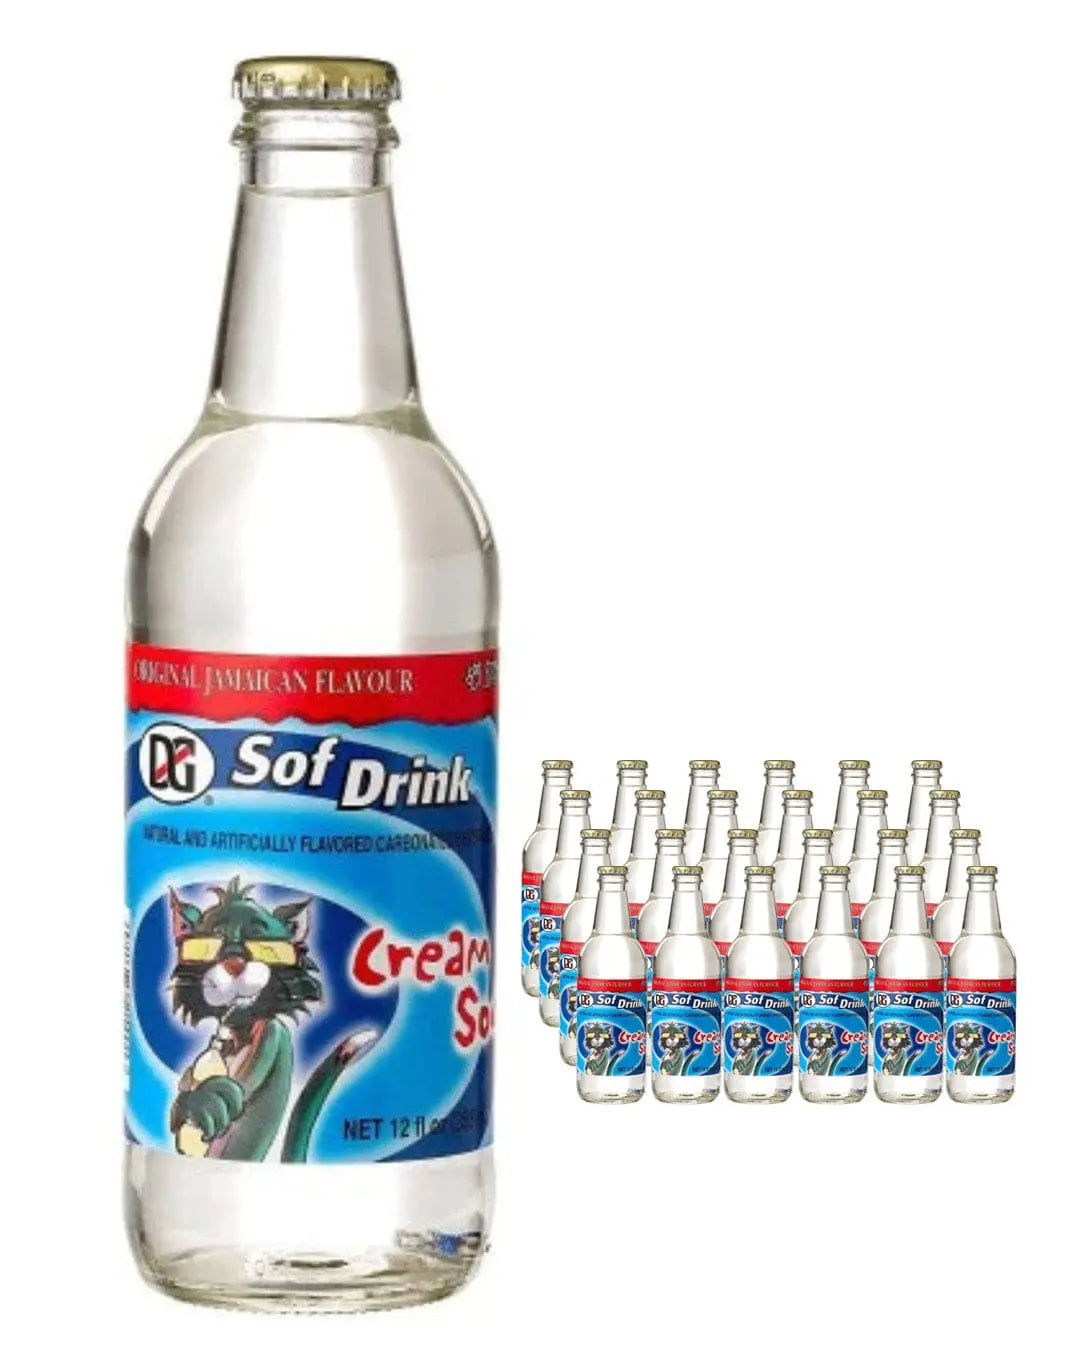 DG Ting Crème Soda Multipack, 24 x 300 ml Soft Drinks & Mixers